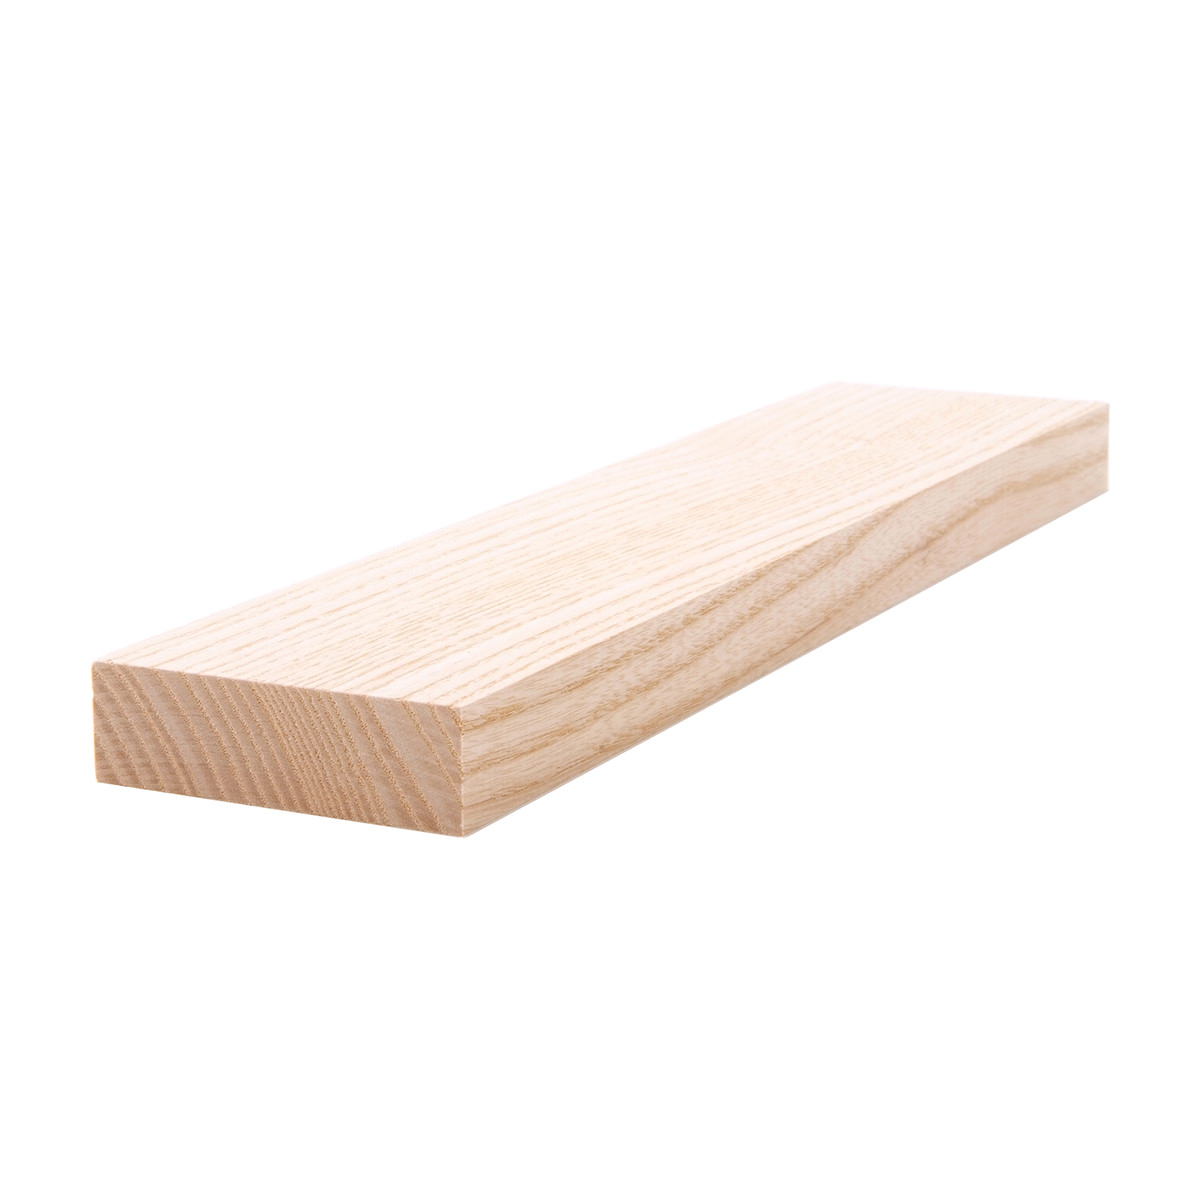 1x3 (3/4" x 21/2") Ash S4S Lumber, Boards, & Flat Stock